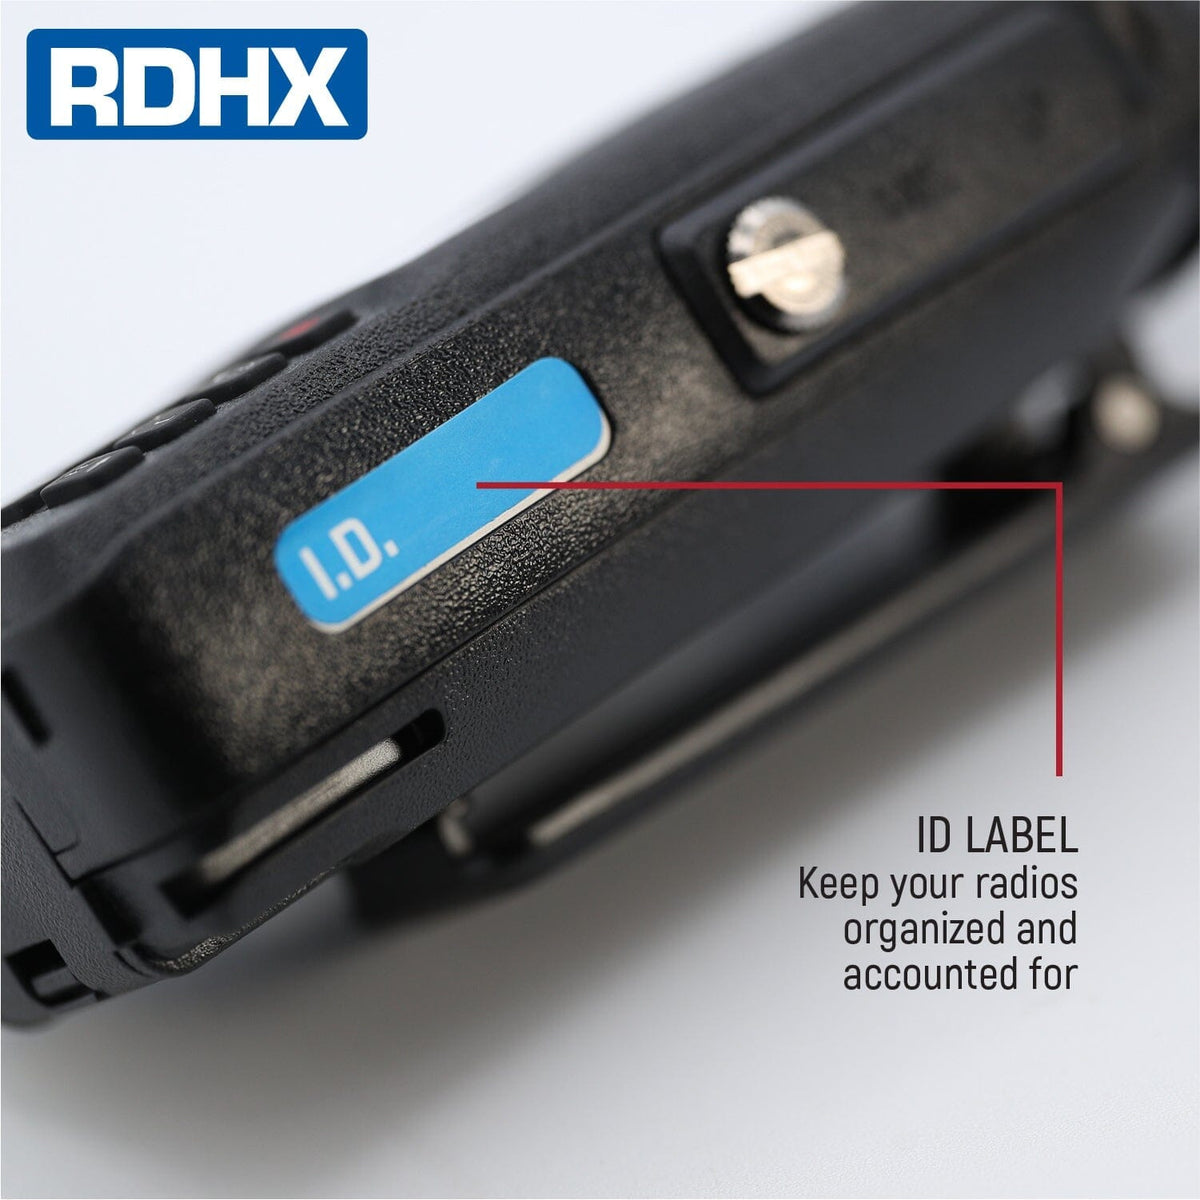 Rugged RDH-X Waterproof Business Band Handheld - Black - Demo - Clearance